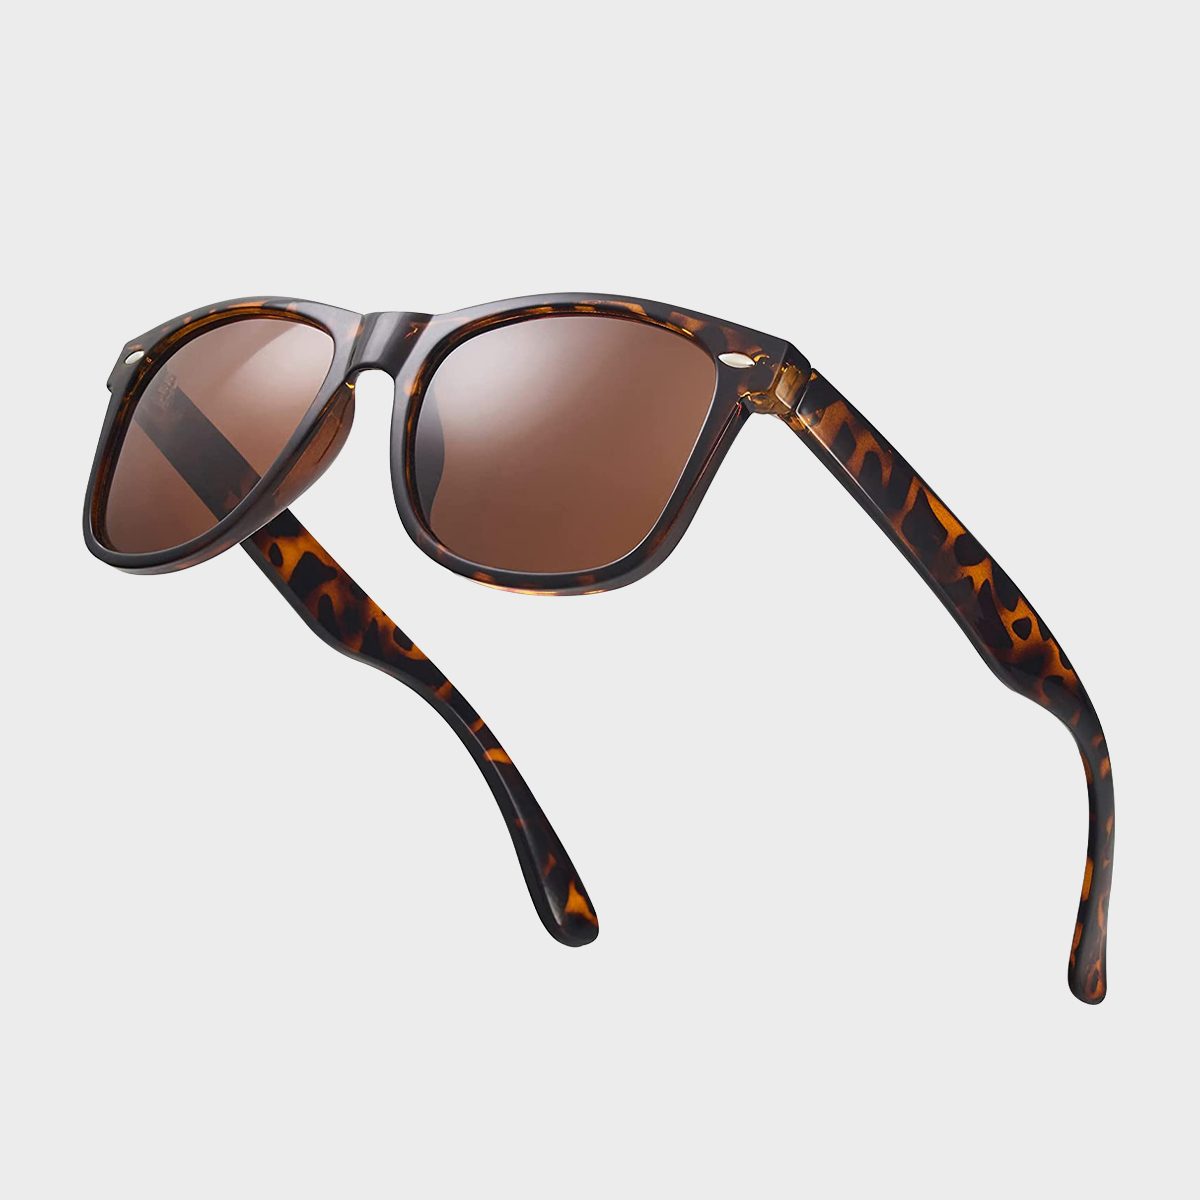 14 Best UV Protection Sunglasses for Optimal Eye Safety